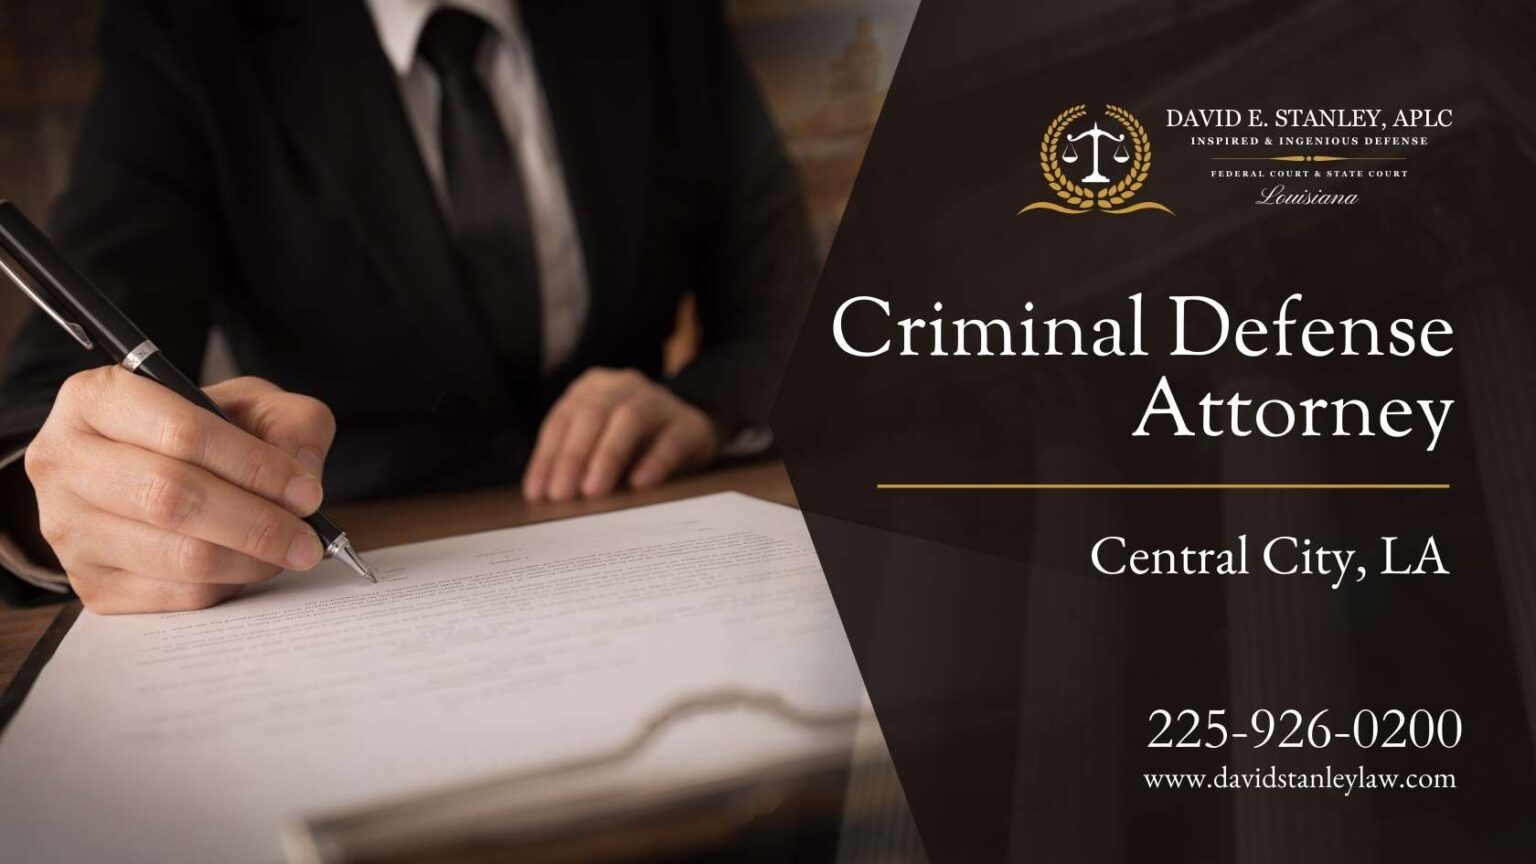 Criminal Defense Attorney Central City LA